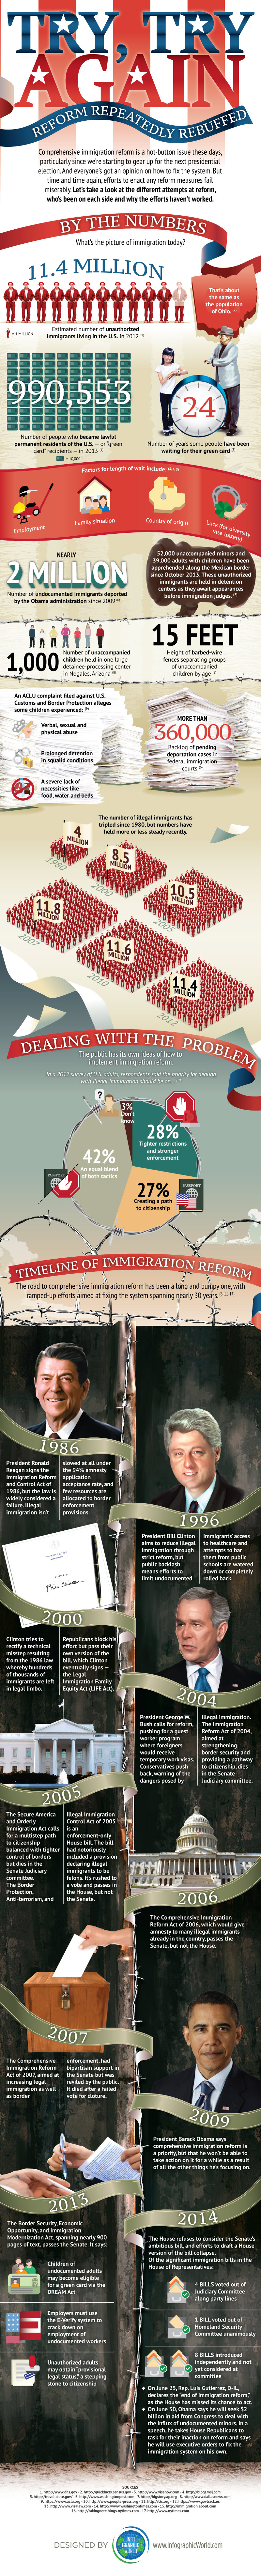 immigration reform infographic